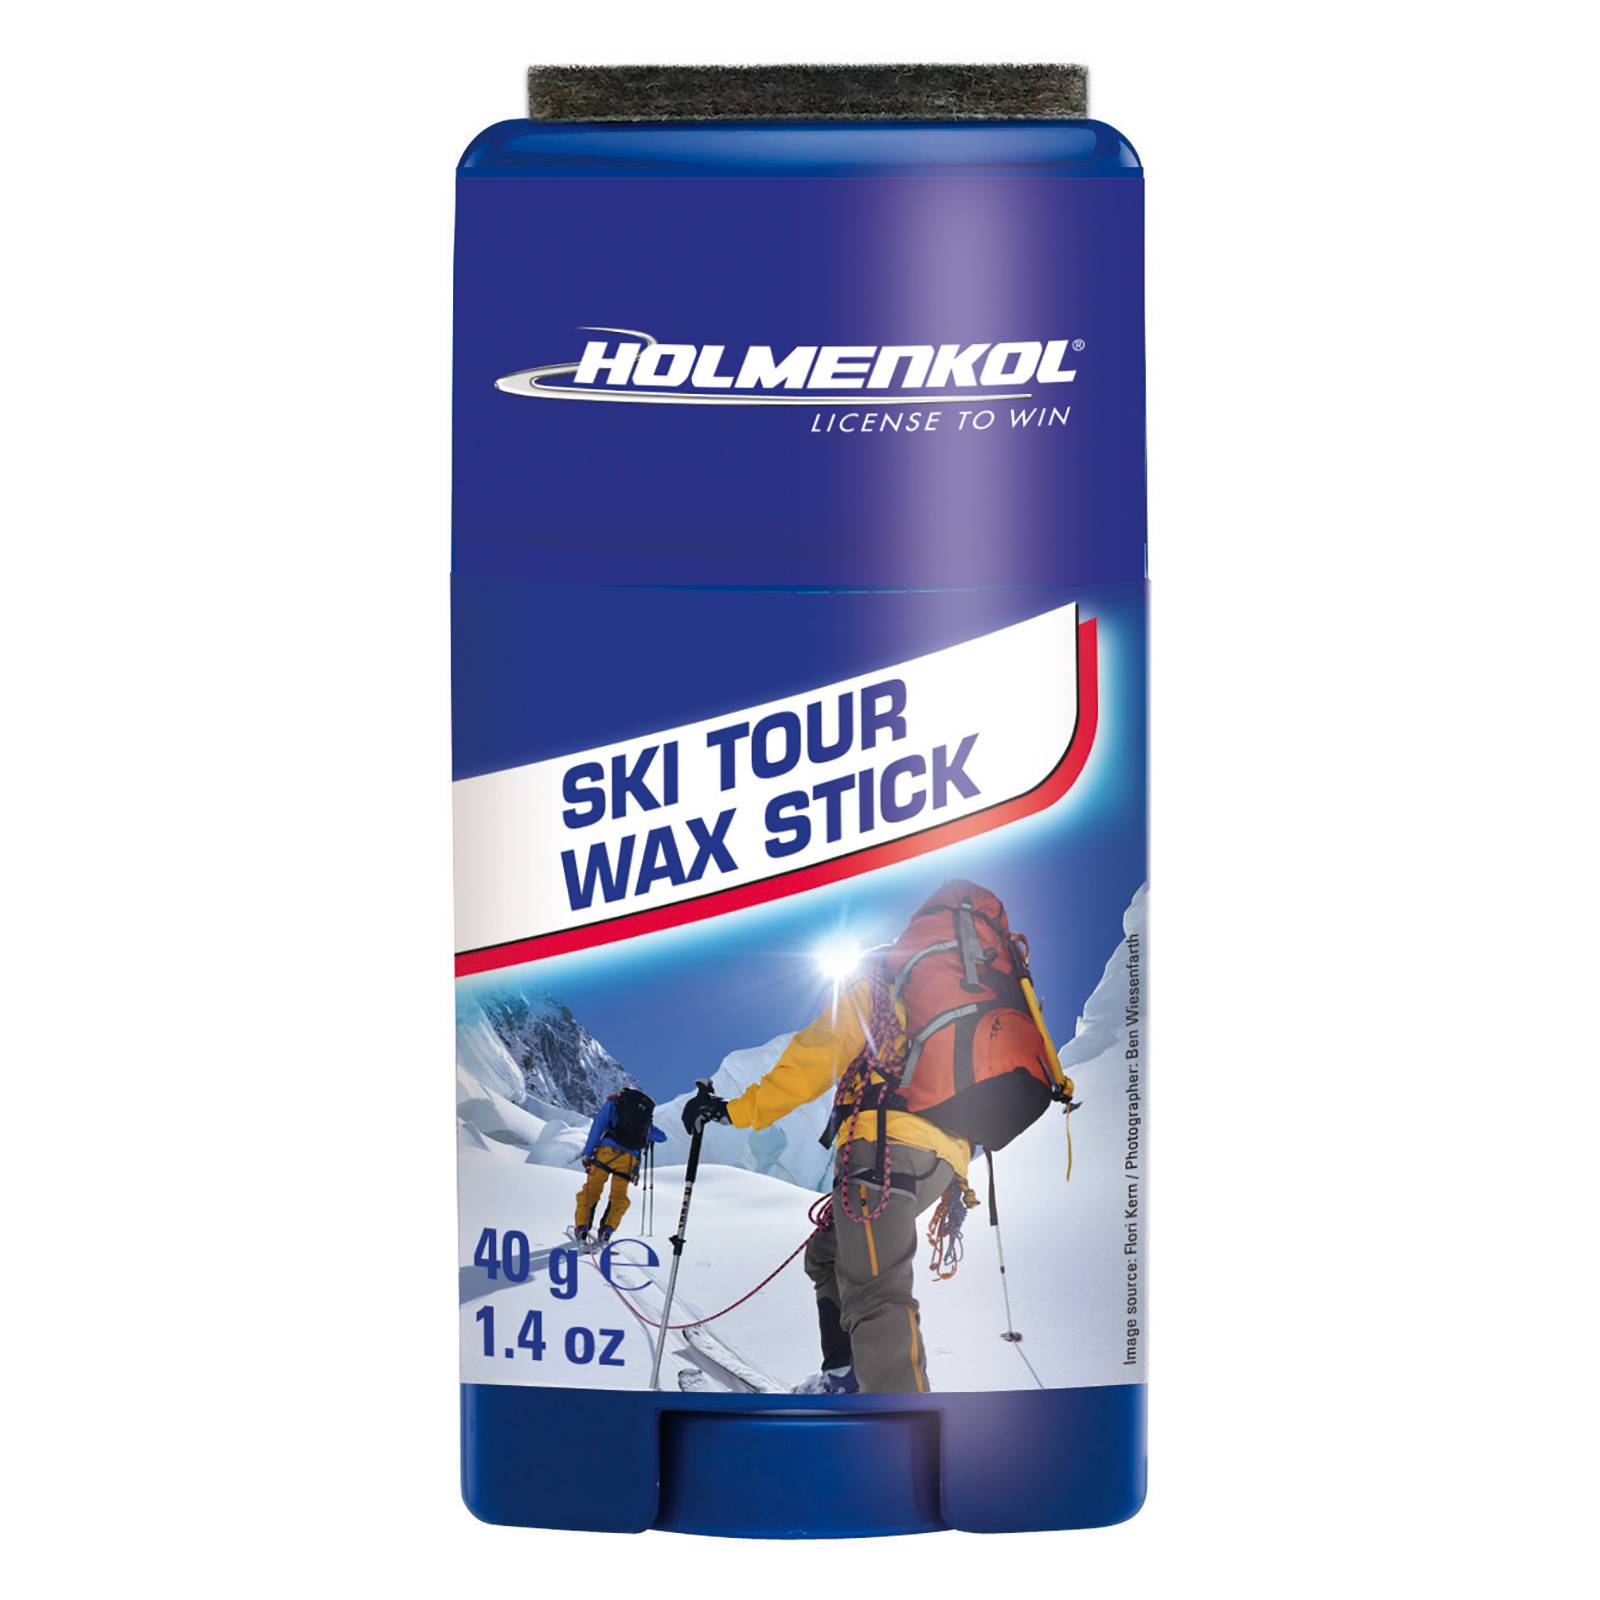 Holmenkol Ski Tour Wax Stick Skiwachs 40g